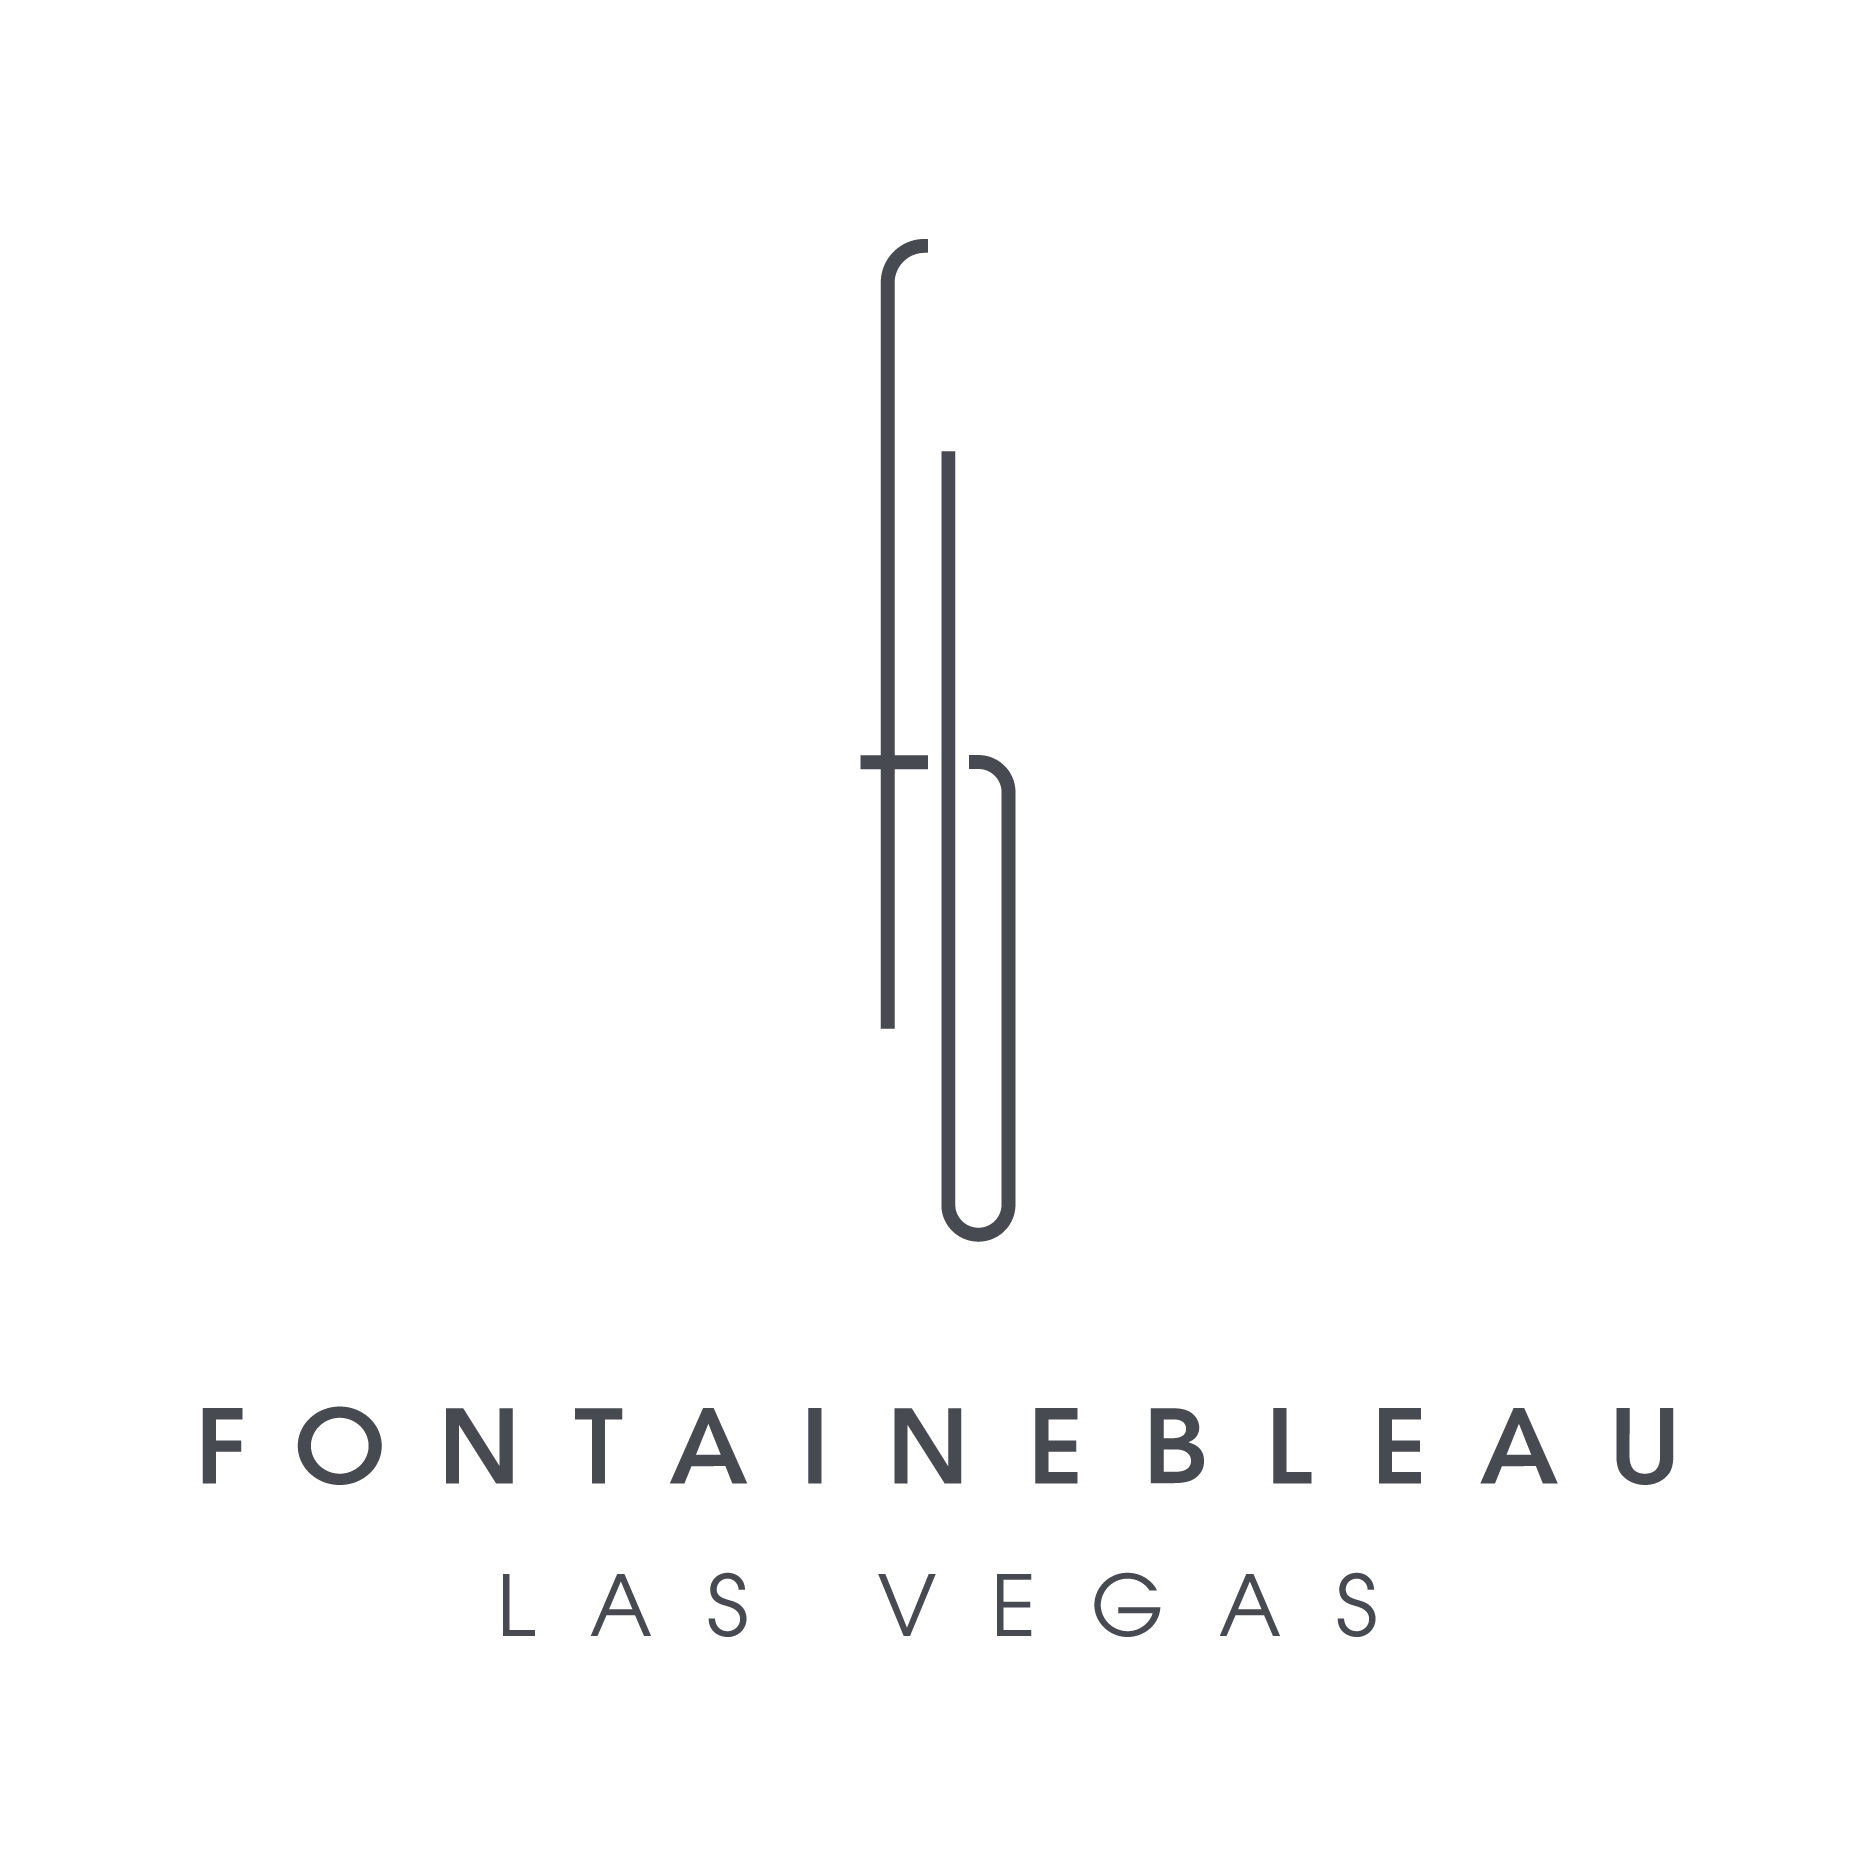 Fontainebleau to open as JW Marriott Las Vegas Blvd in 2023